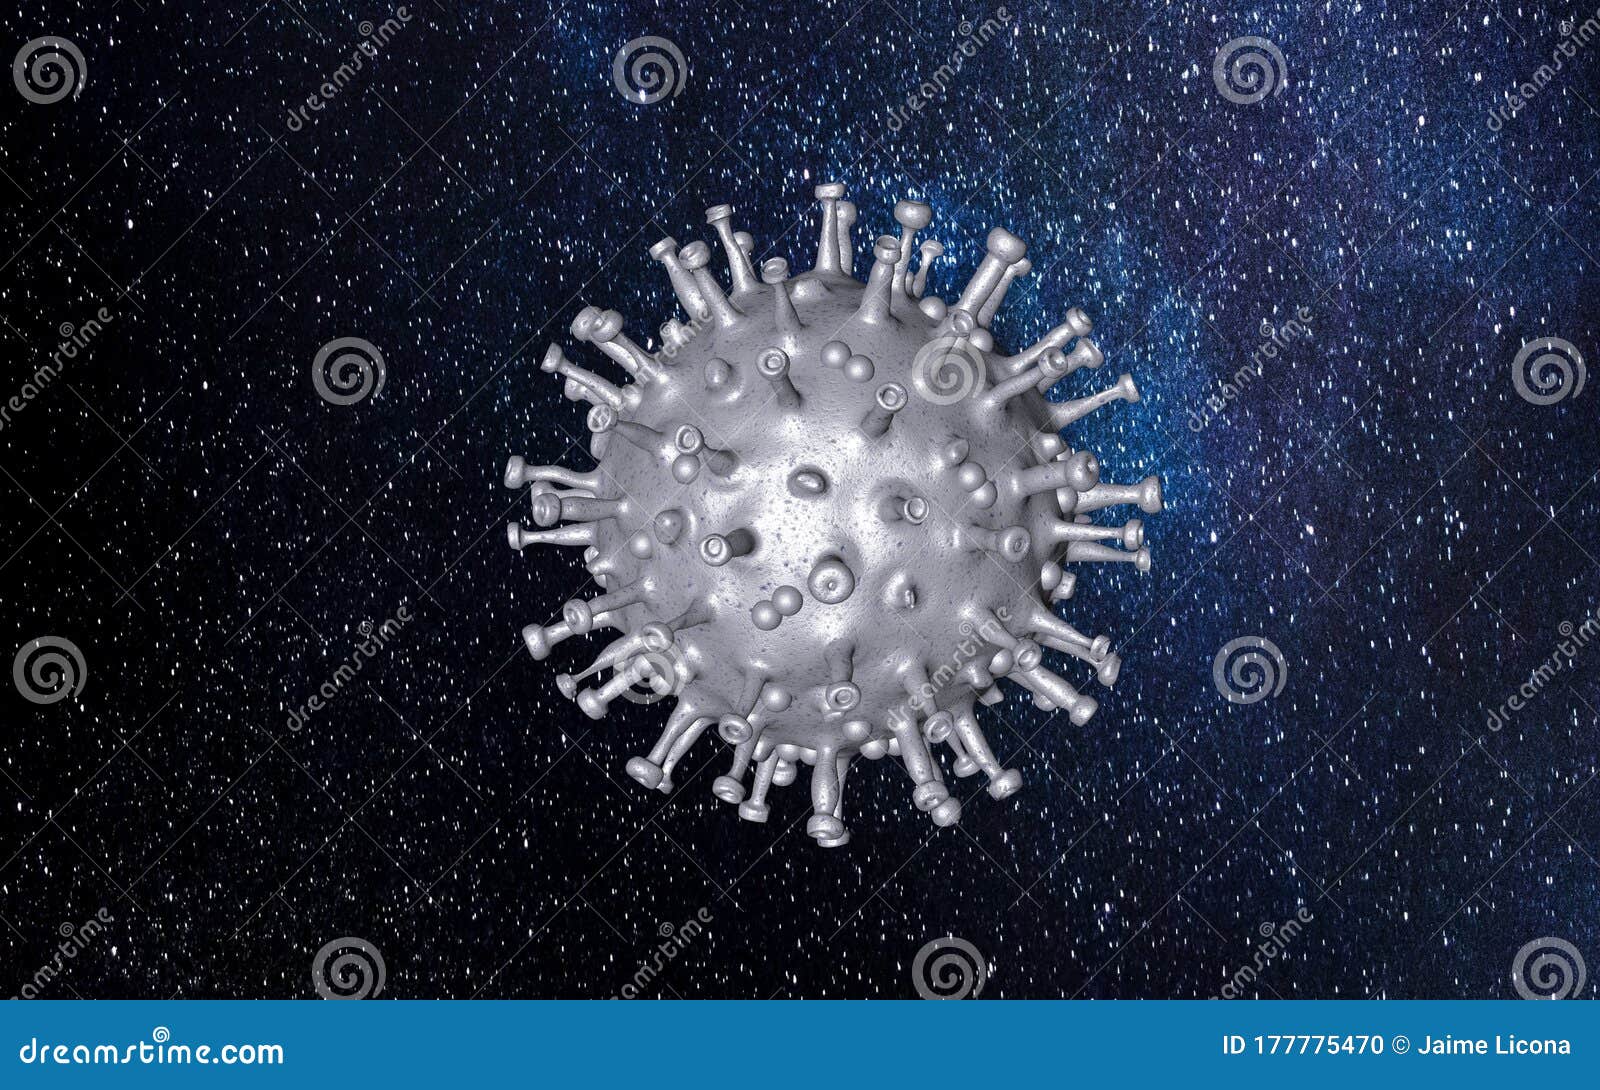 covid-19 coronavirus microscopic virus in space like a moon